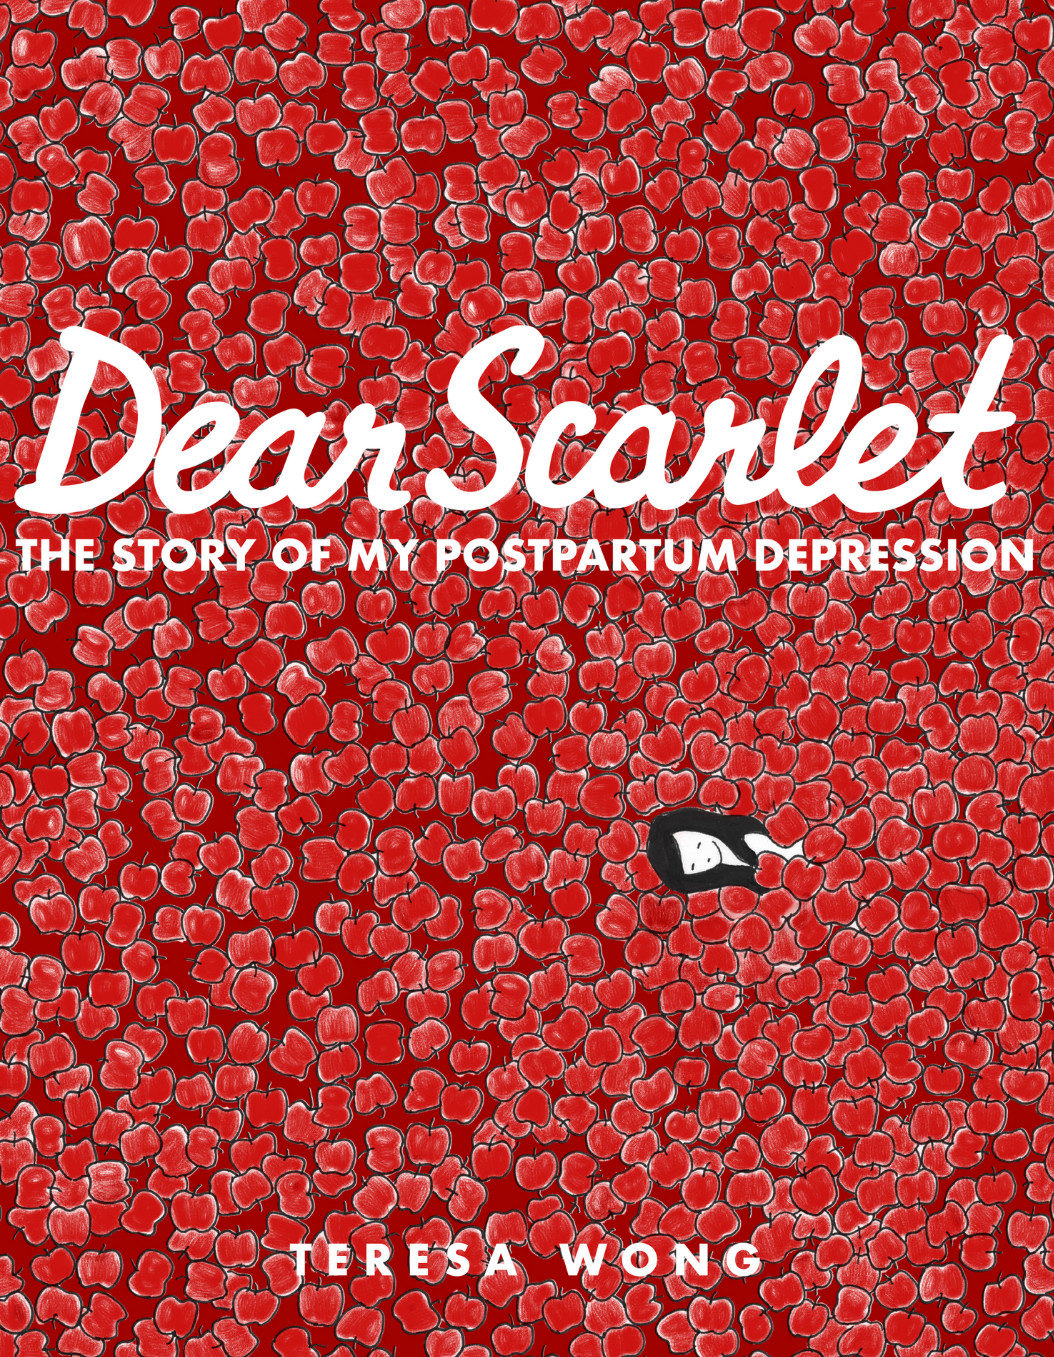 Cover art of Teresa Wong's graphic memoir, Dear Scarlet.